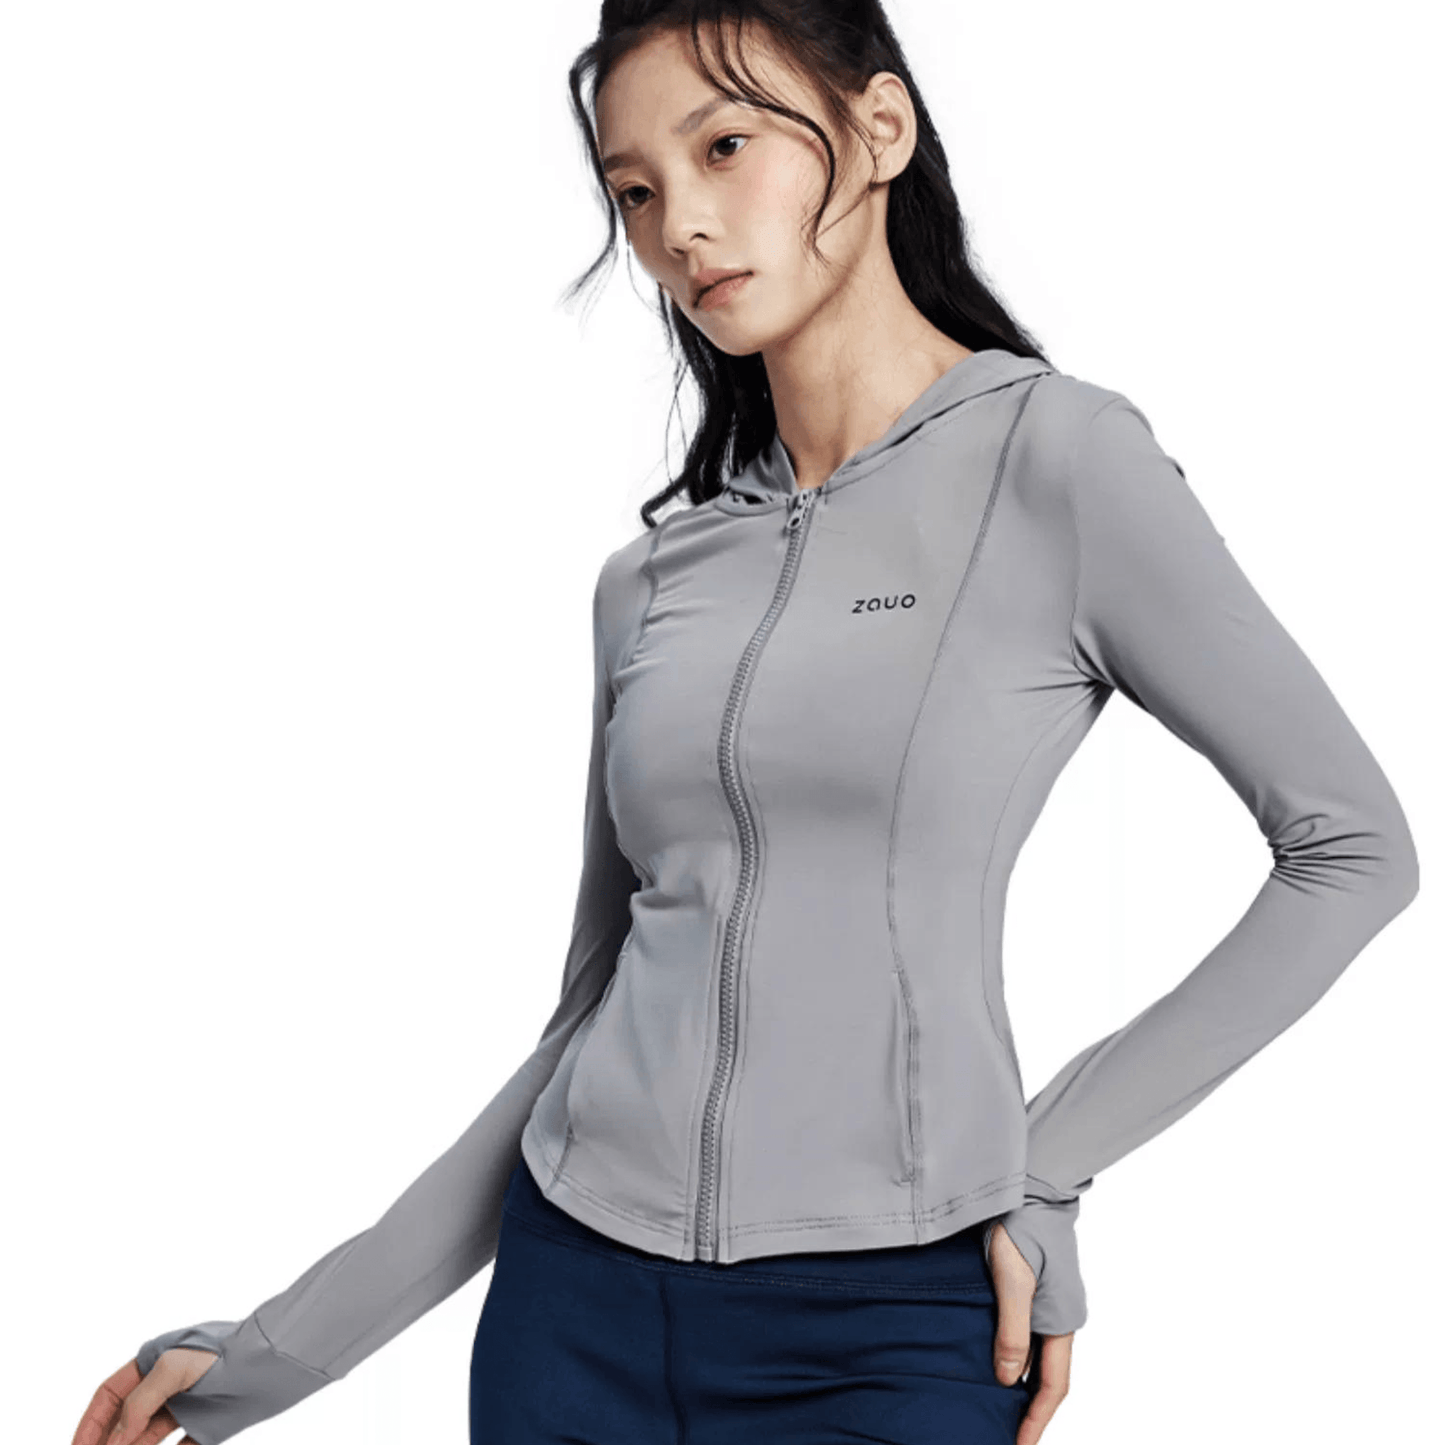 ZAUO Korean Ice-Fabric Hoodie: Stay Cool, Protected, and Fashionable - UPF50+, Blocks 99% of UV Rays"